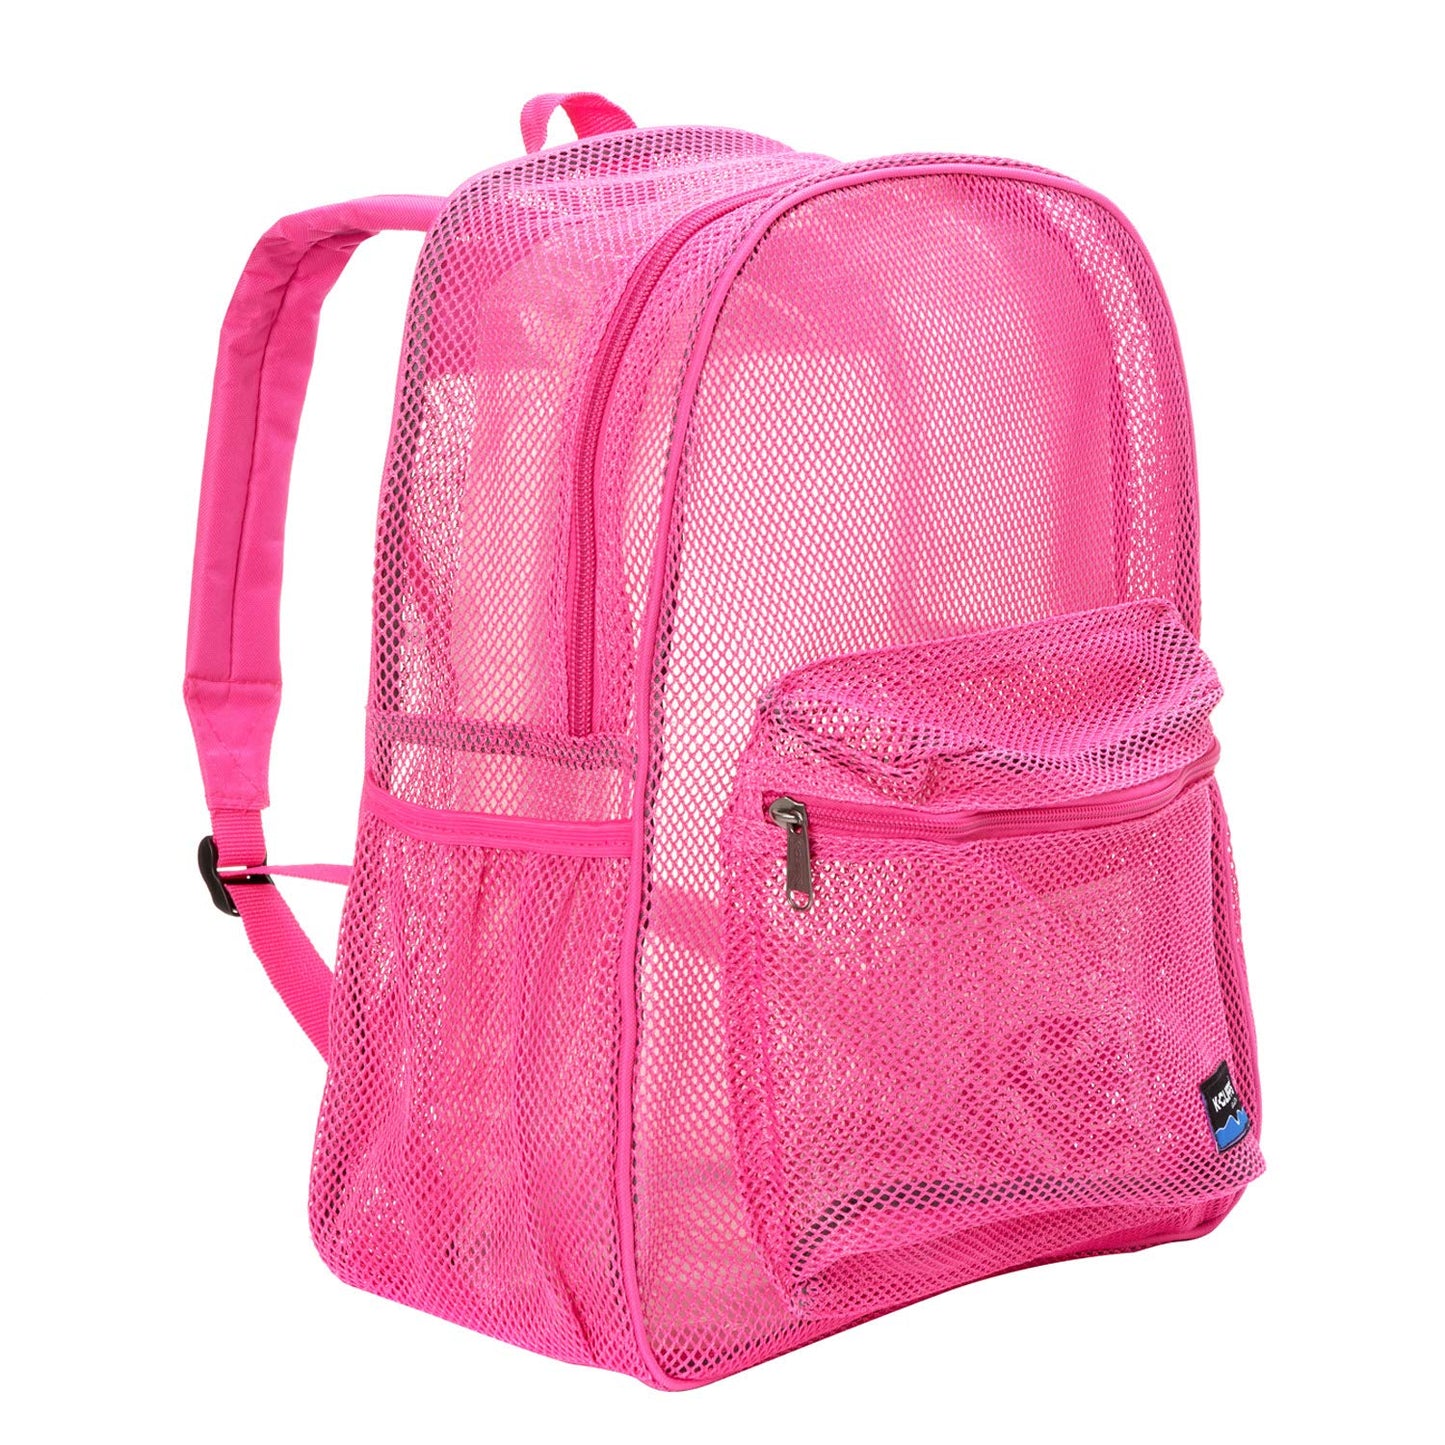 K-Cliffs Heavy Duty Mesh Backpack Classic Student Bookbag Durable See Through Netting Gym Bag Pack</li>     <li>Padded Straps